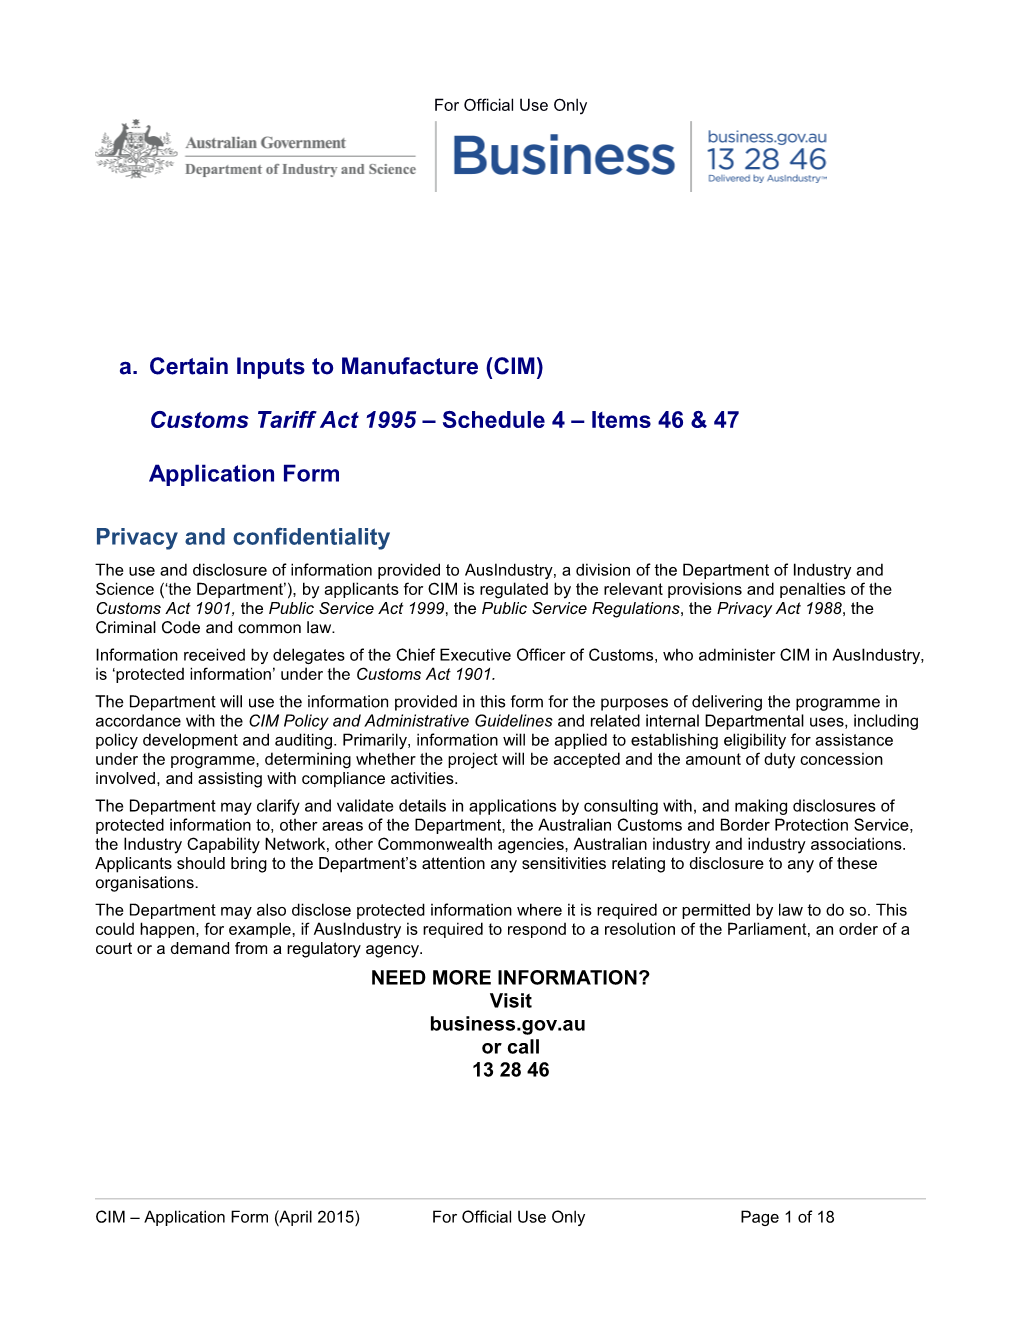 CIM - Application Form